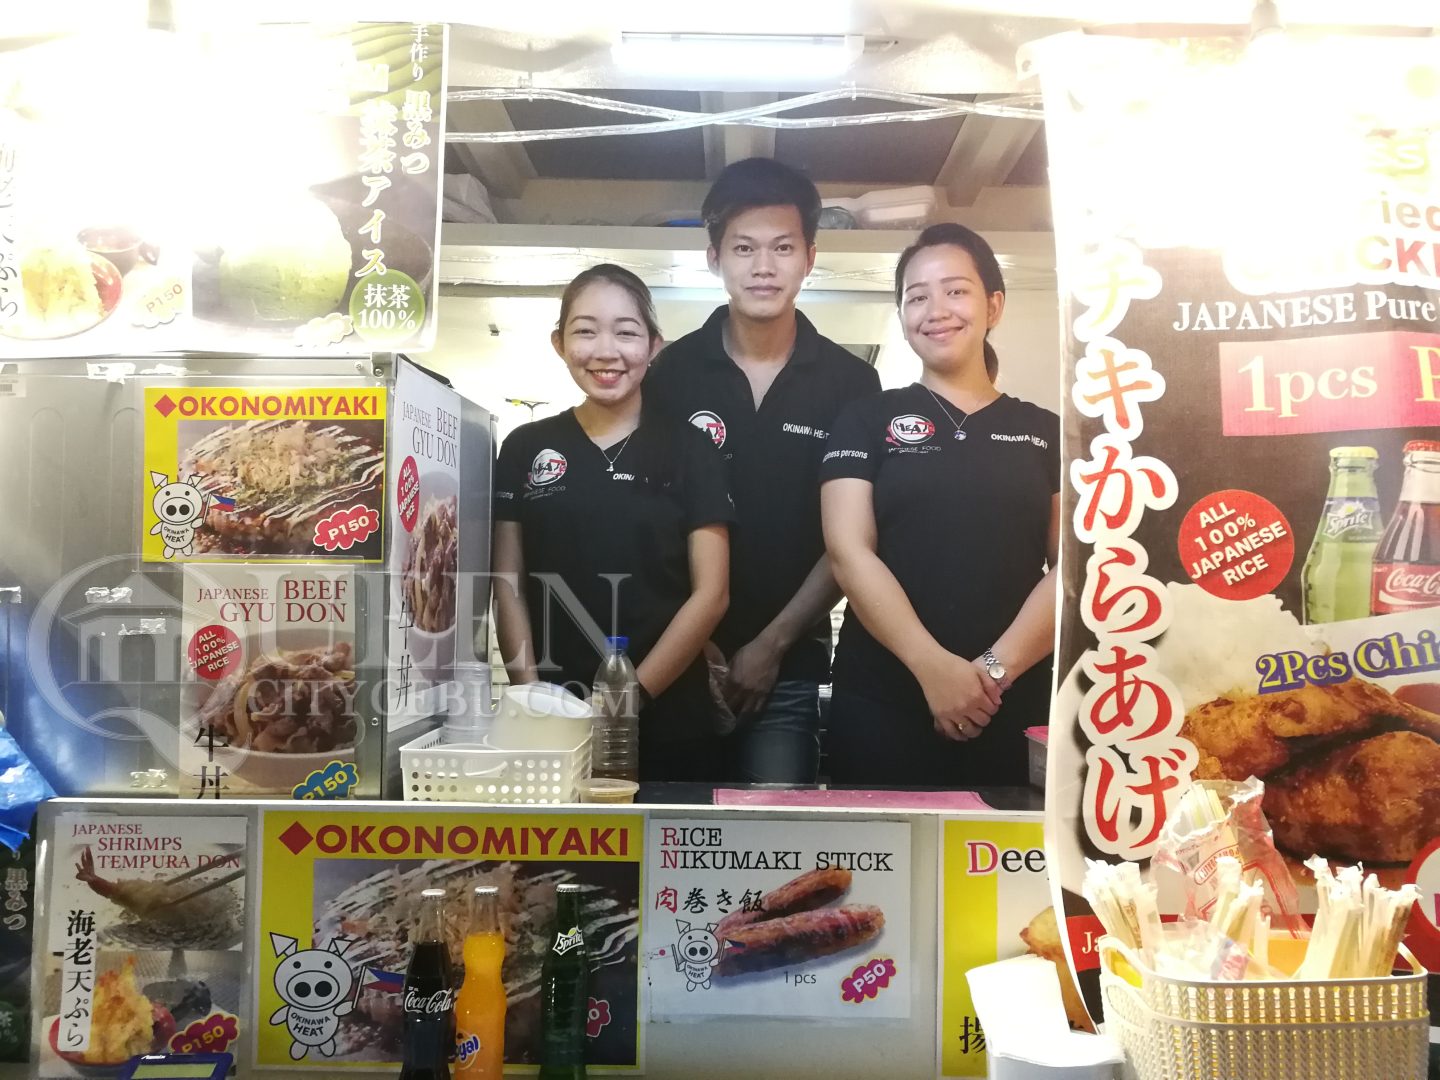 Okinawa Heat Japanese Food Truck Staff